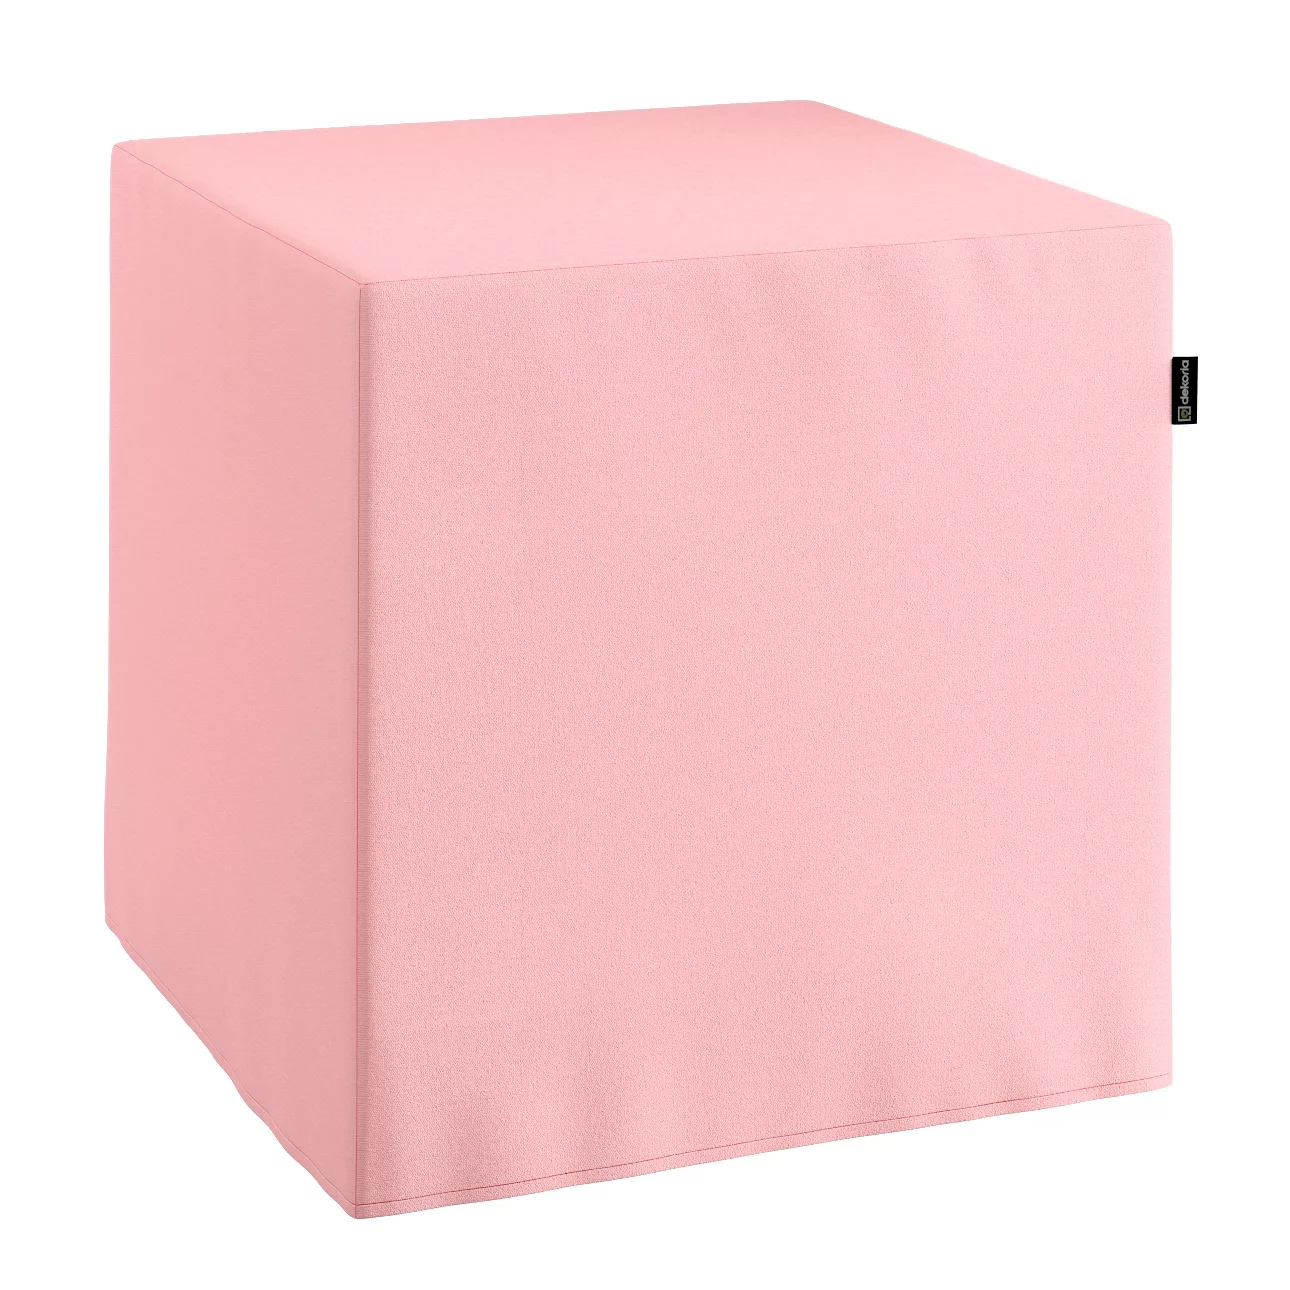 Sitzwürfel, rosa, 40 x 40 x 40 cm, Loneta (133-39) günstig online kaufen